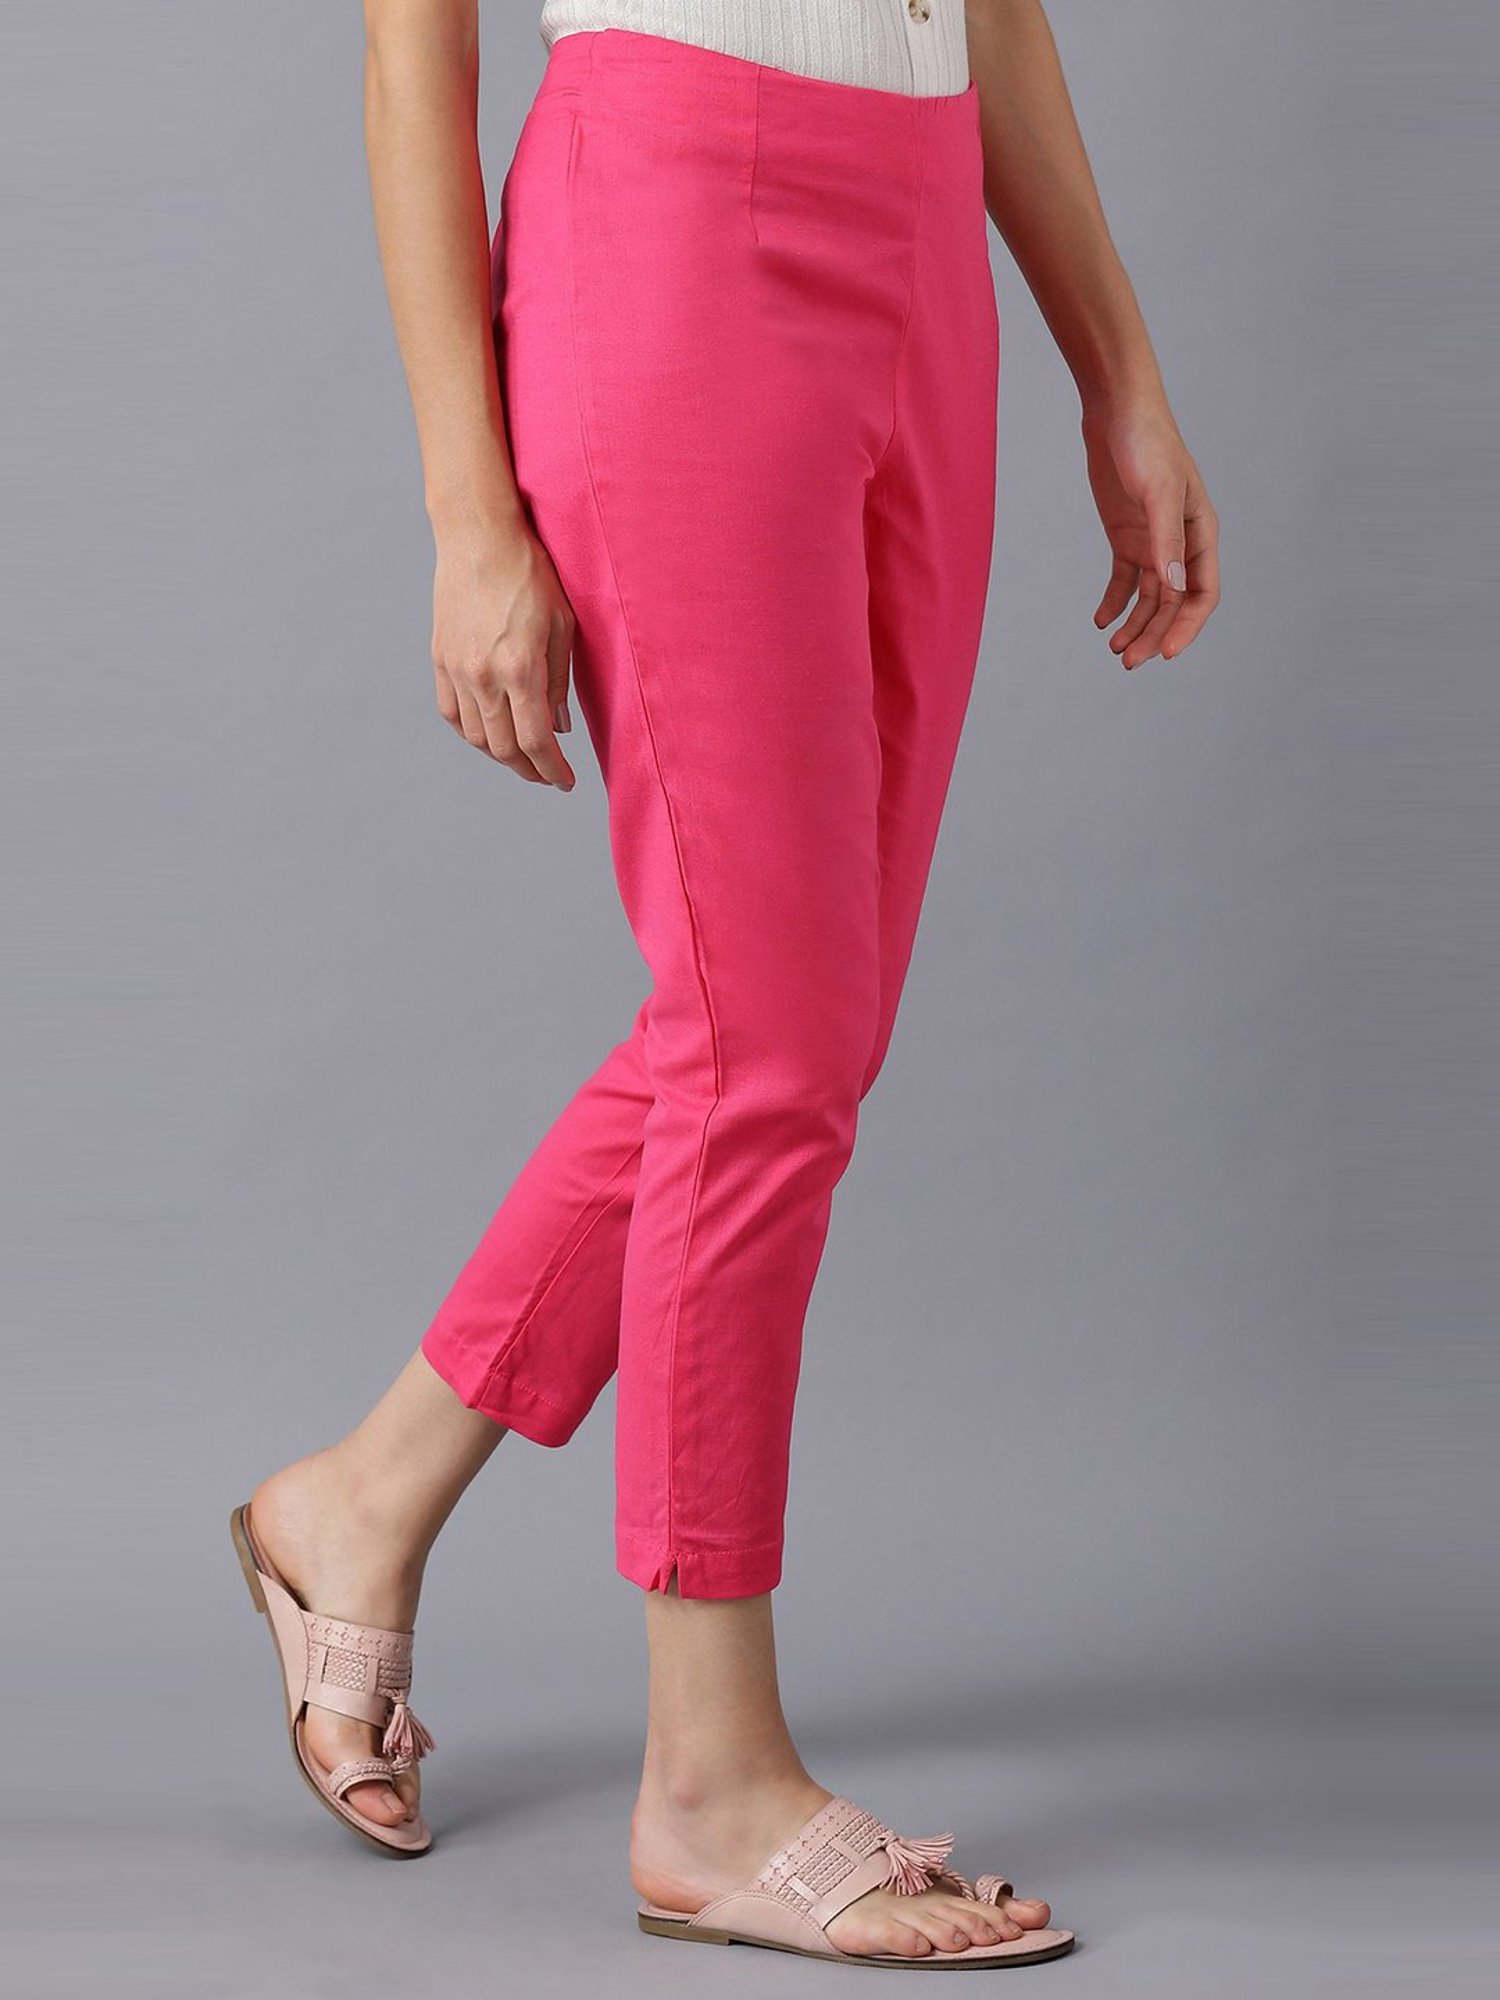 How To Wear Pink Pants For Women 2023  FashionGumcom